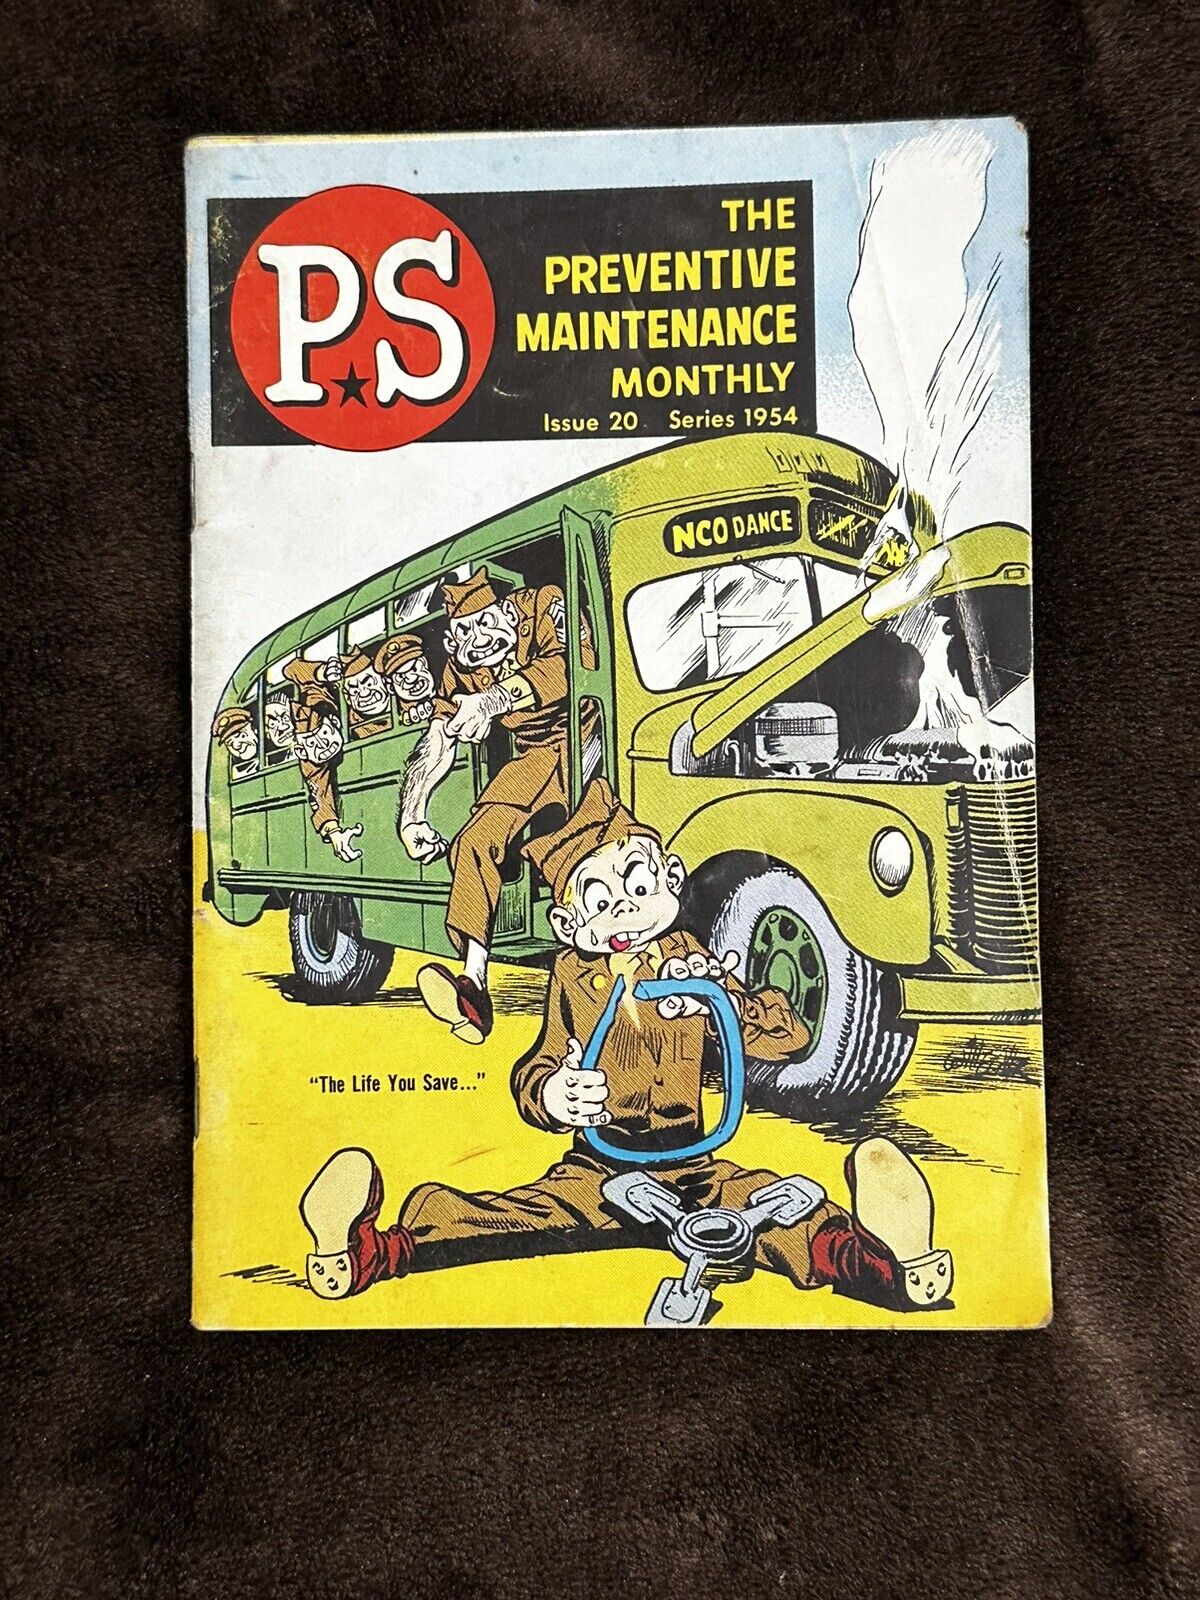 Preventive Maintenance Monthly #20 November 1954